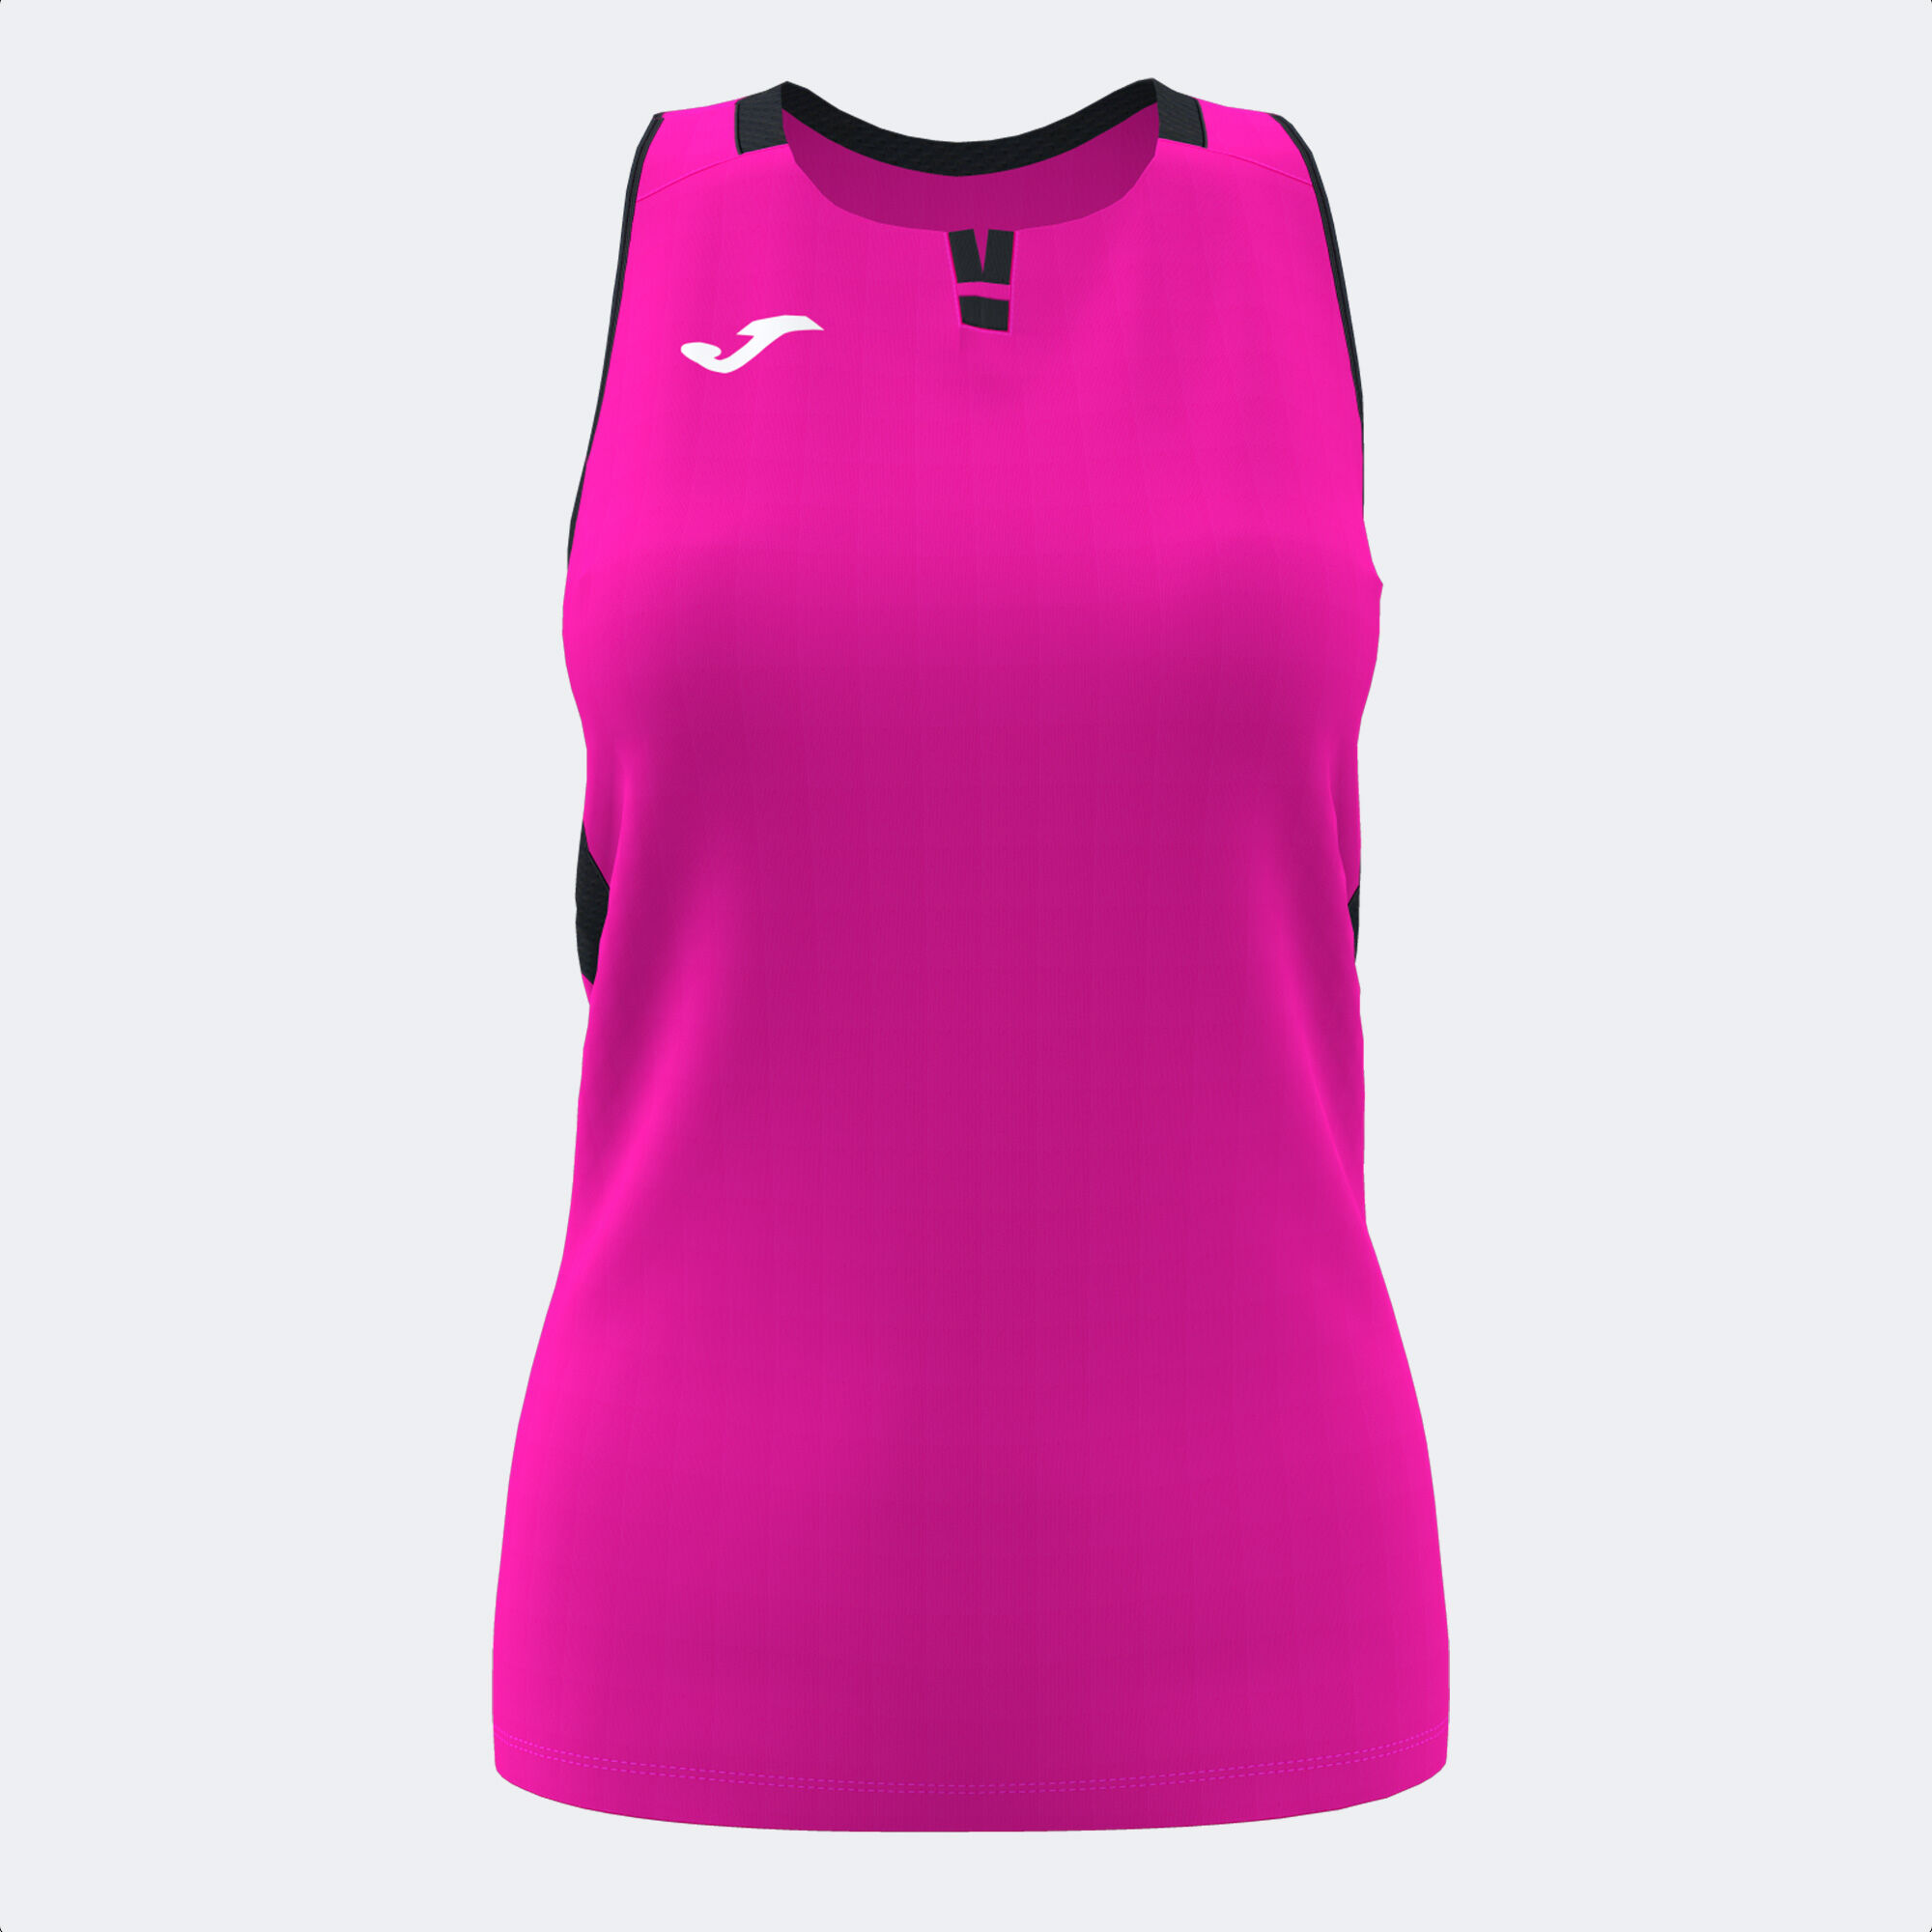 Shirt s/m frau Ranking neon-rosa schwarz